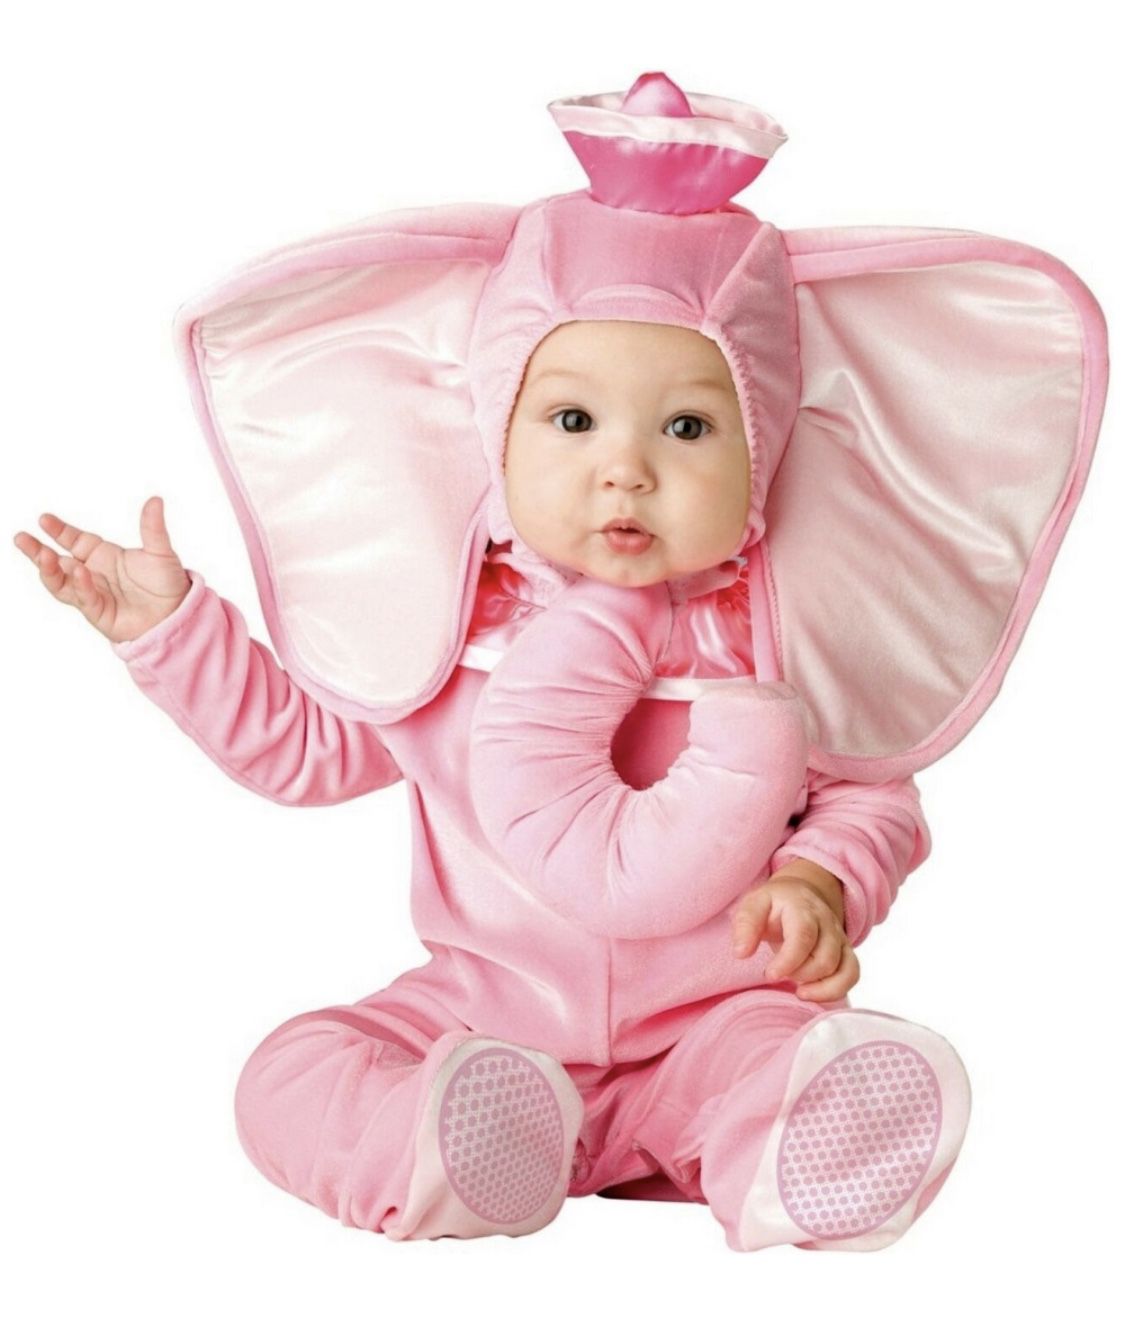 Pink Elephant Costume - Infant 6-12 Months 